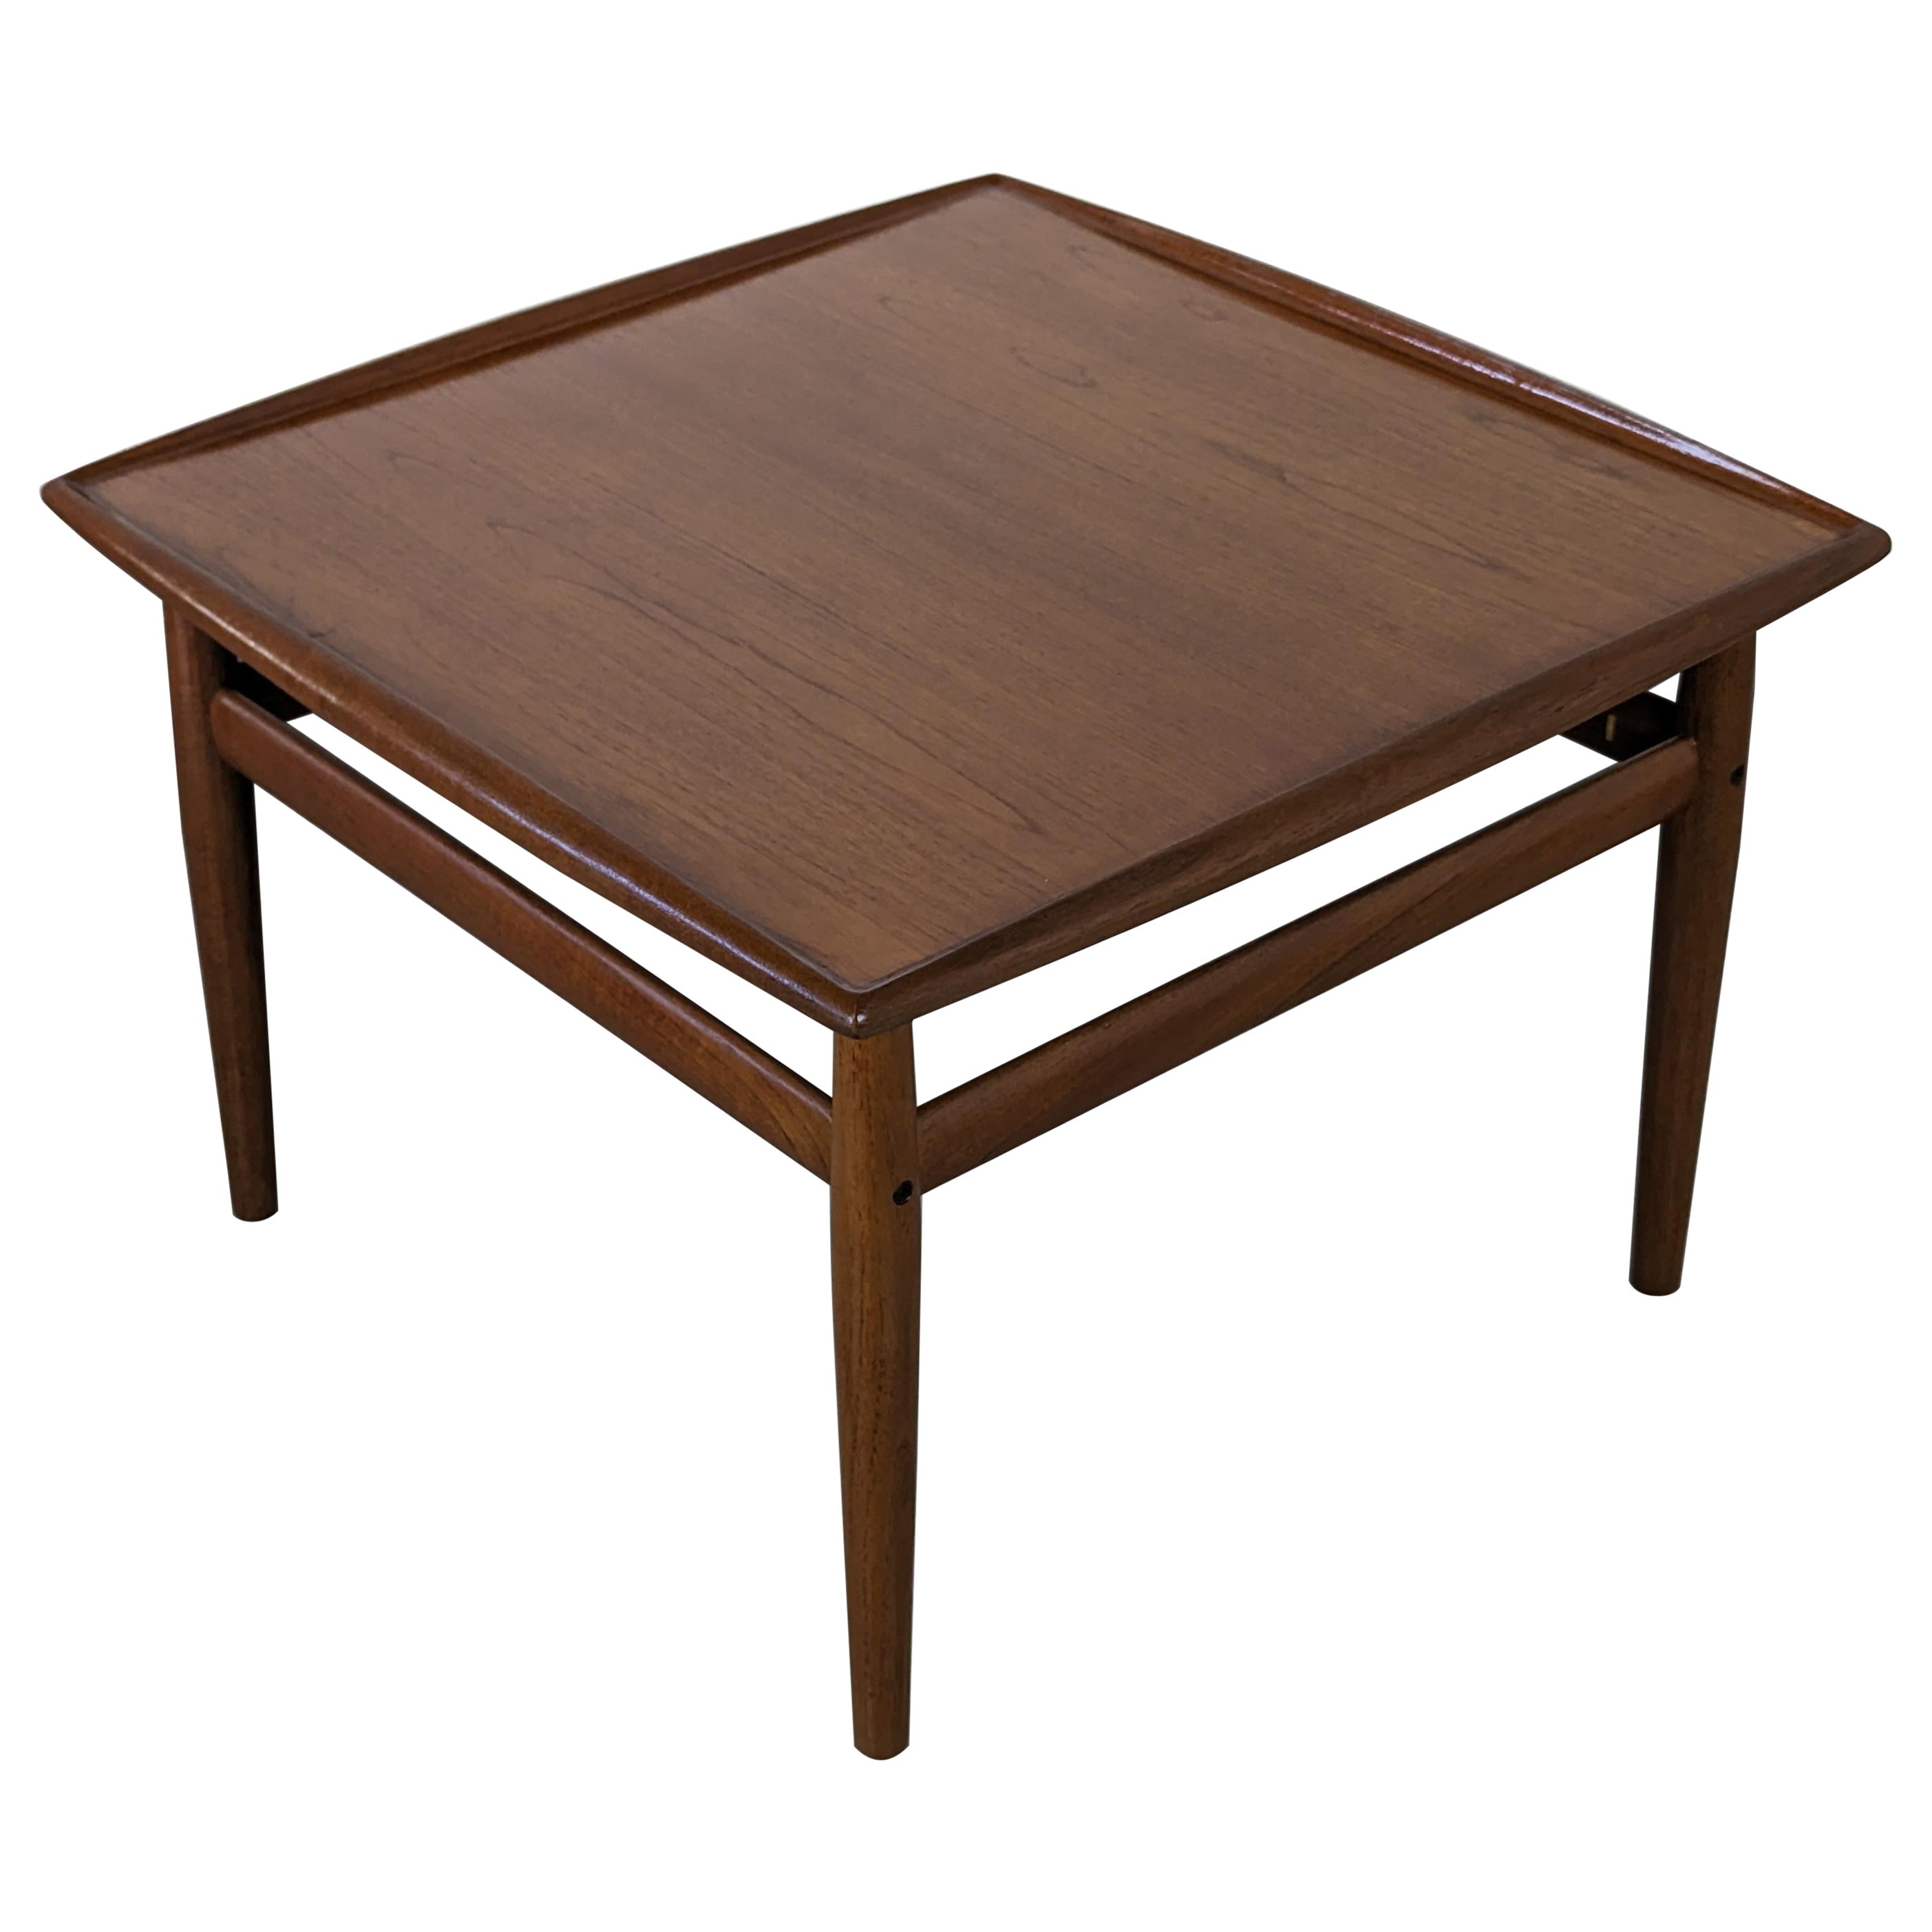 Mid Century Modern Teak Side Table Designed by Grete Jalk for Glostrup, c1960s